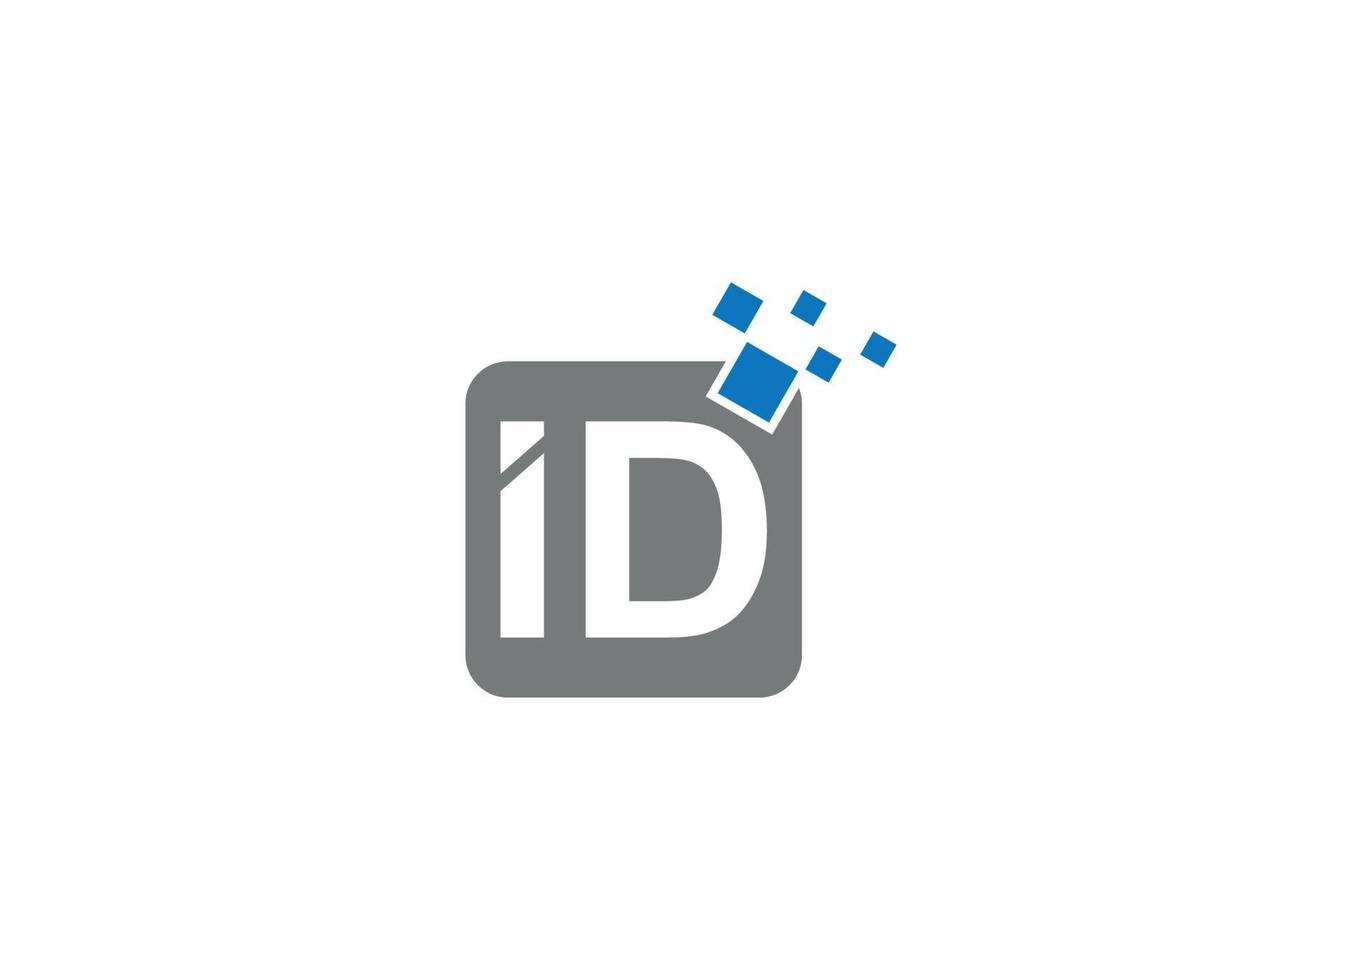 ID modern logo design vector icon template